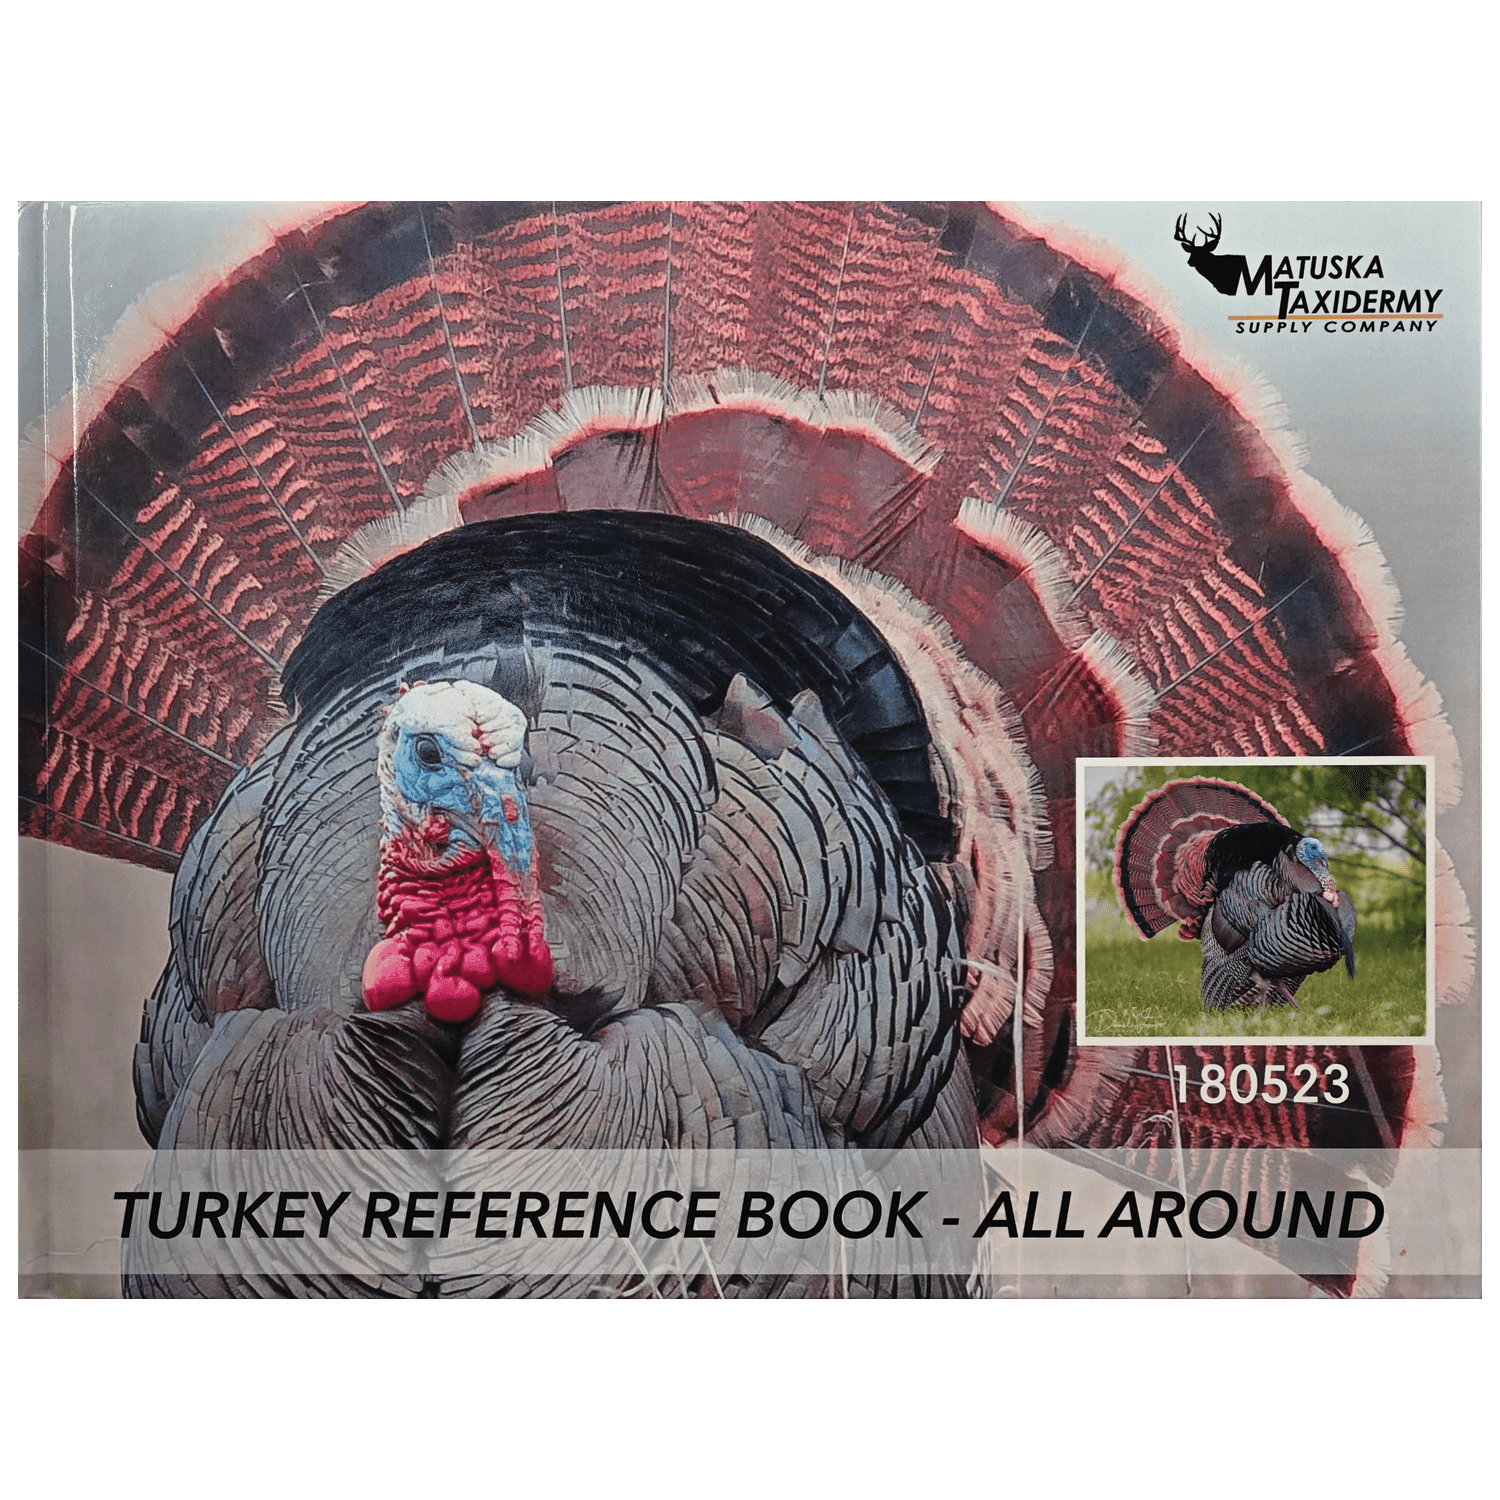 Turkey Reference Books - Images by Dan Verrips - Matuska Taxidermy Supply Company